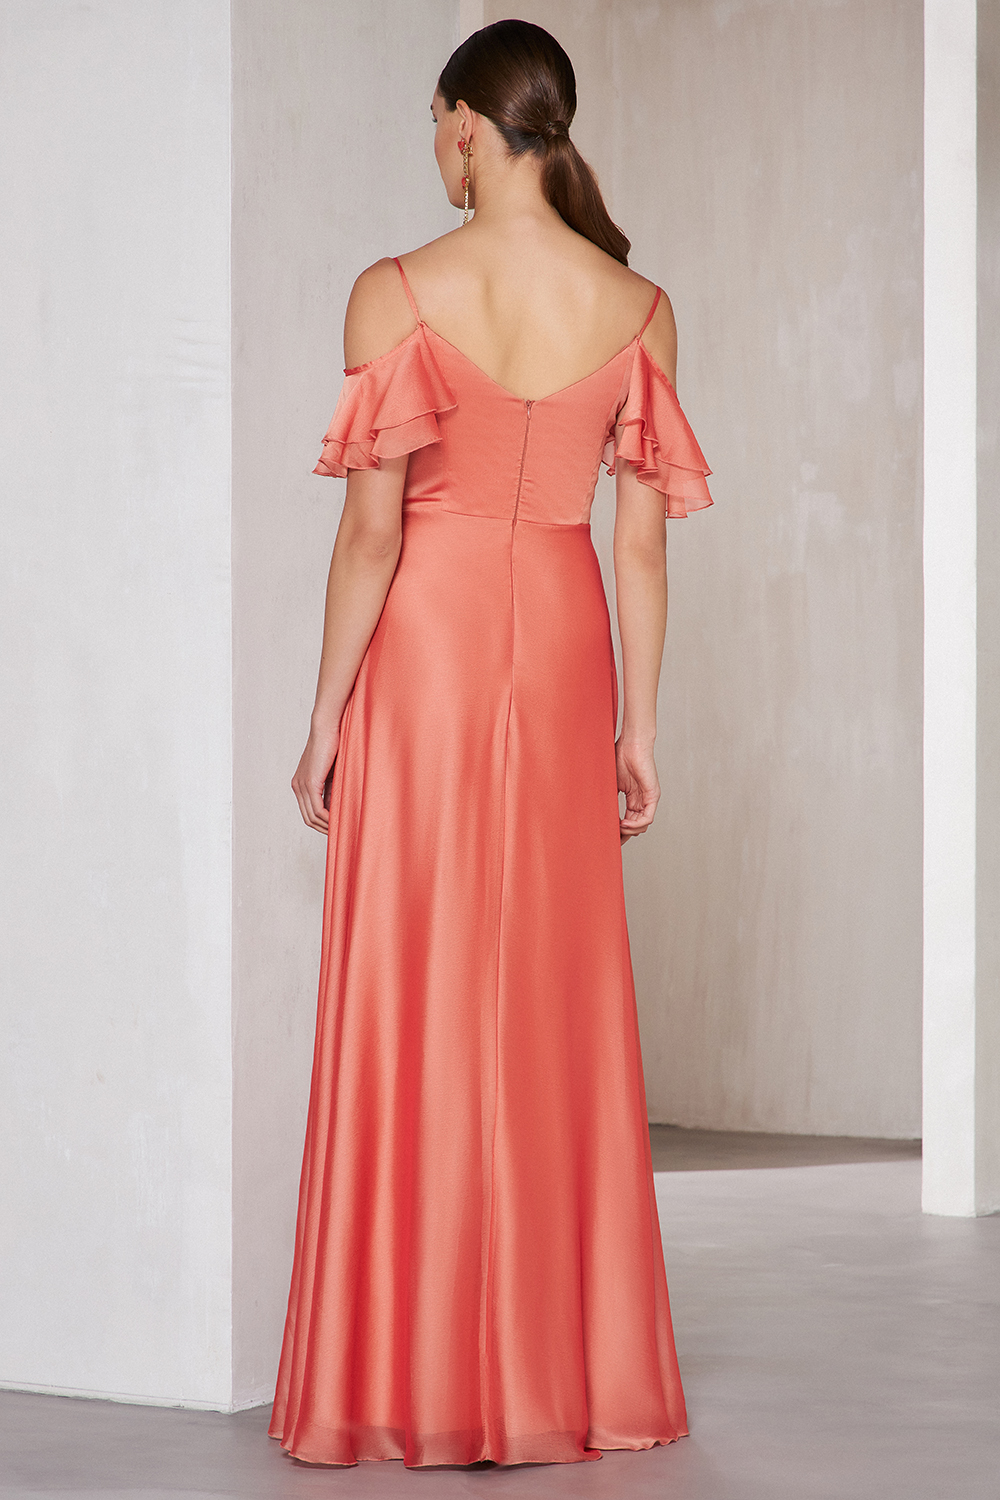 Коктейльные платья / Long cocktail dress with shining fabric and sleeves